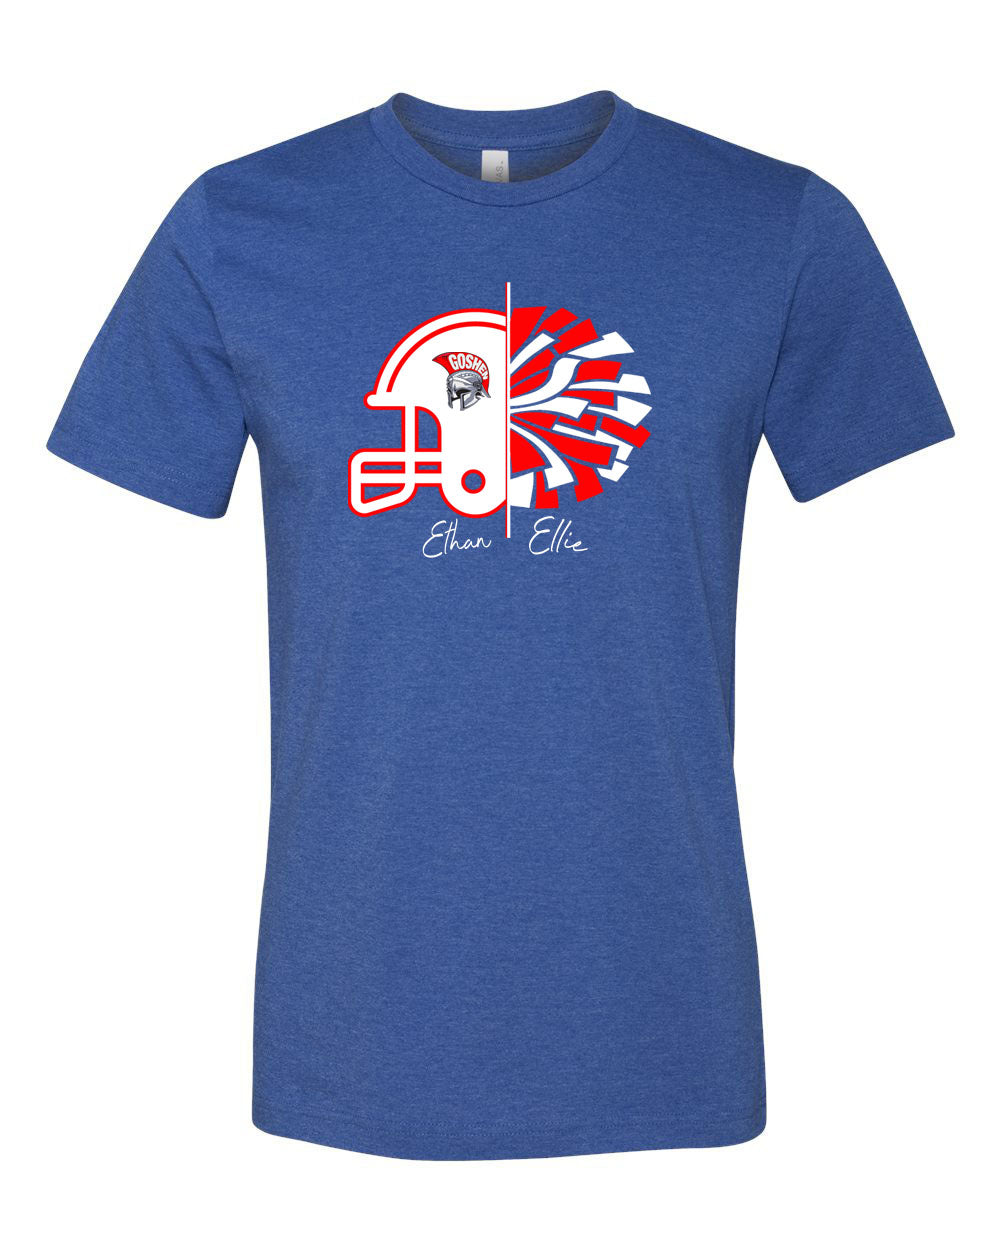 Goshen Cheer Design 11 T-Shirt